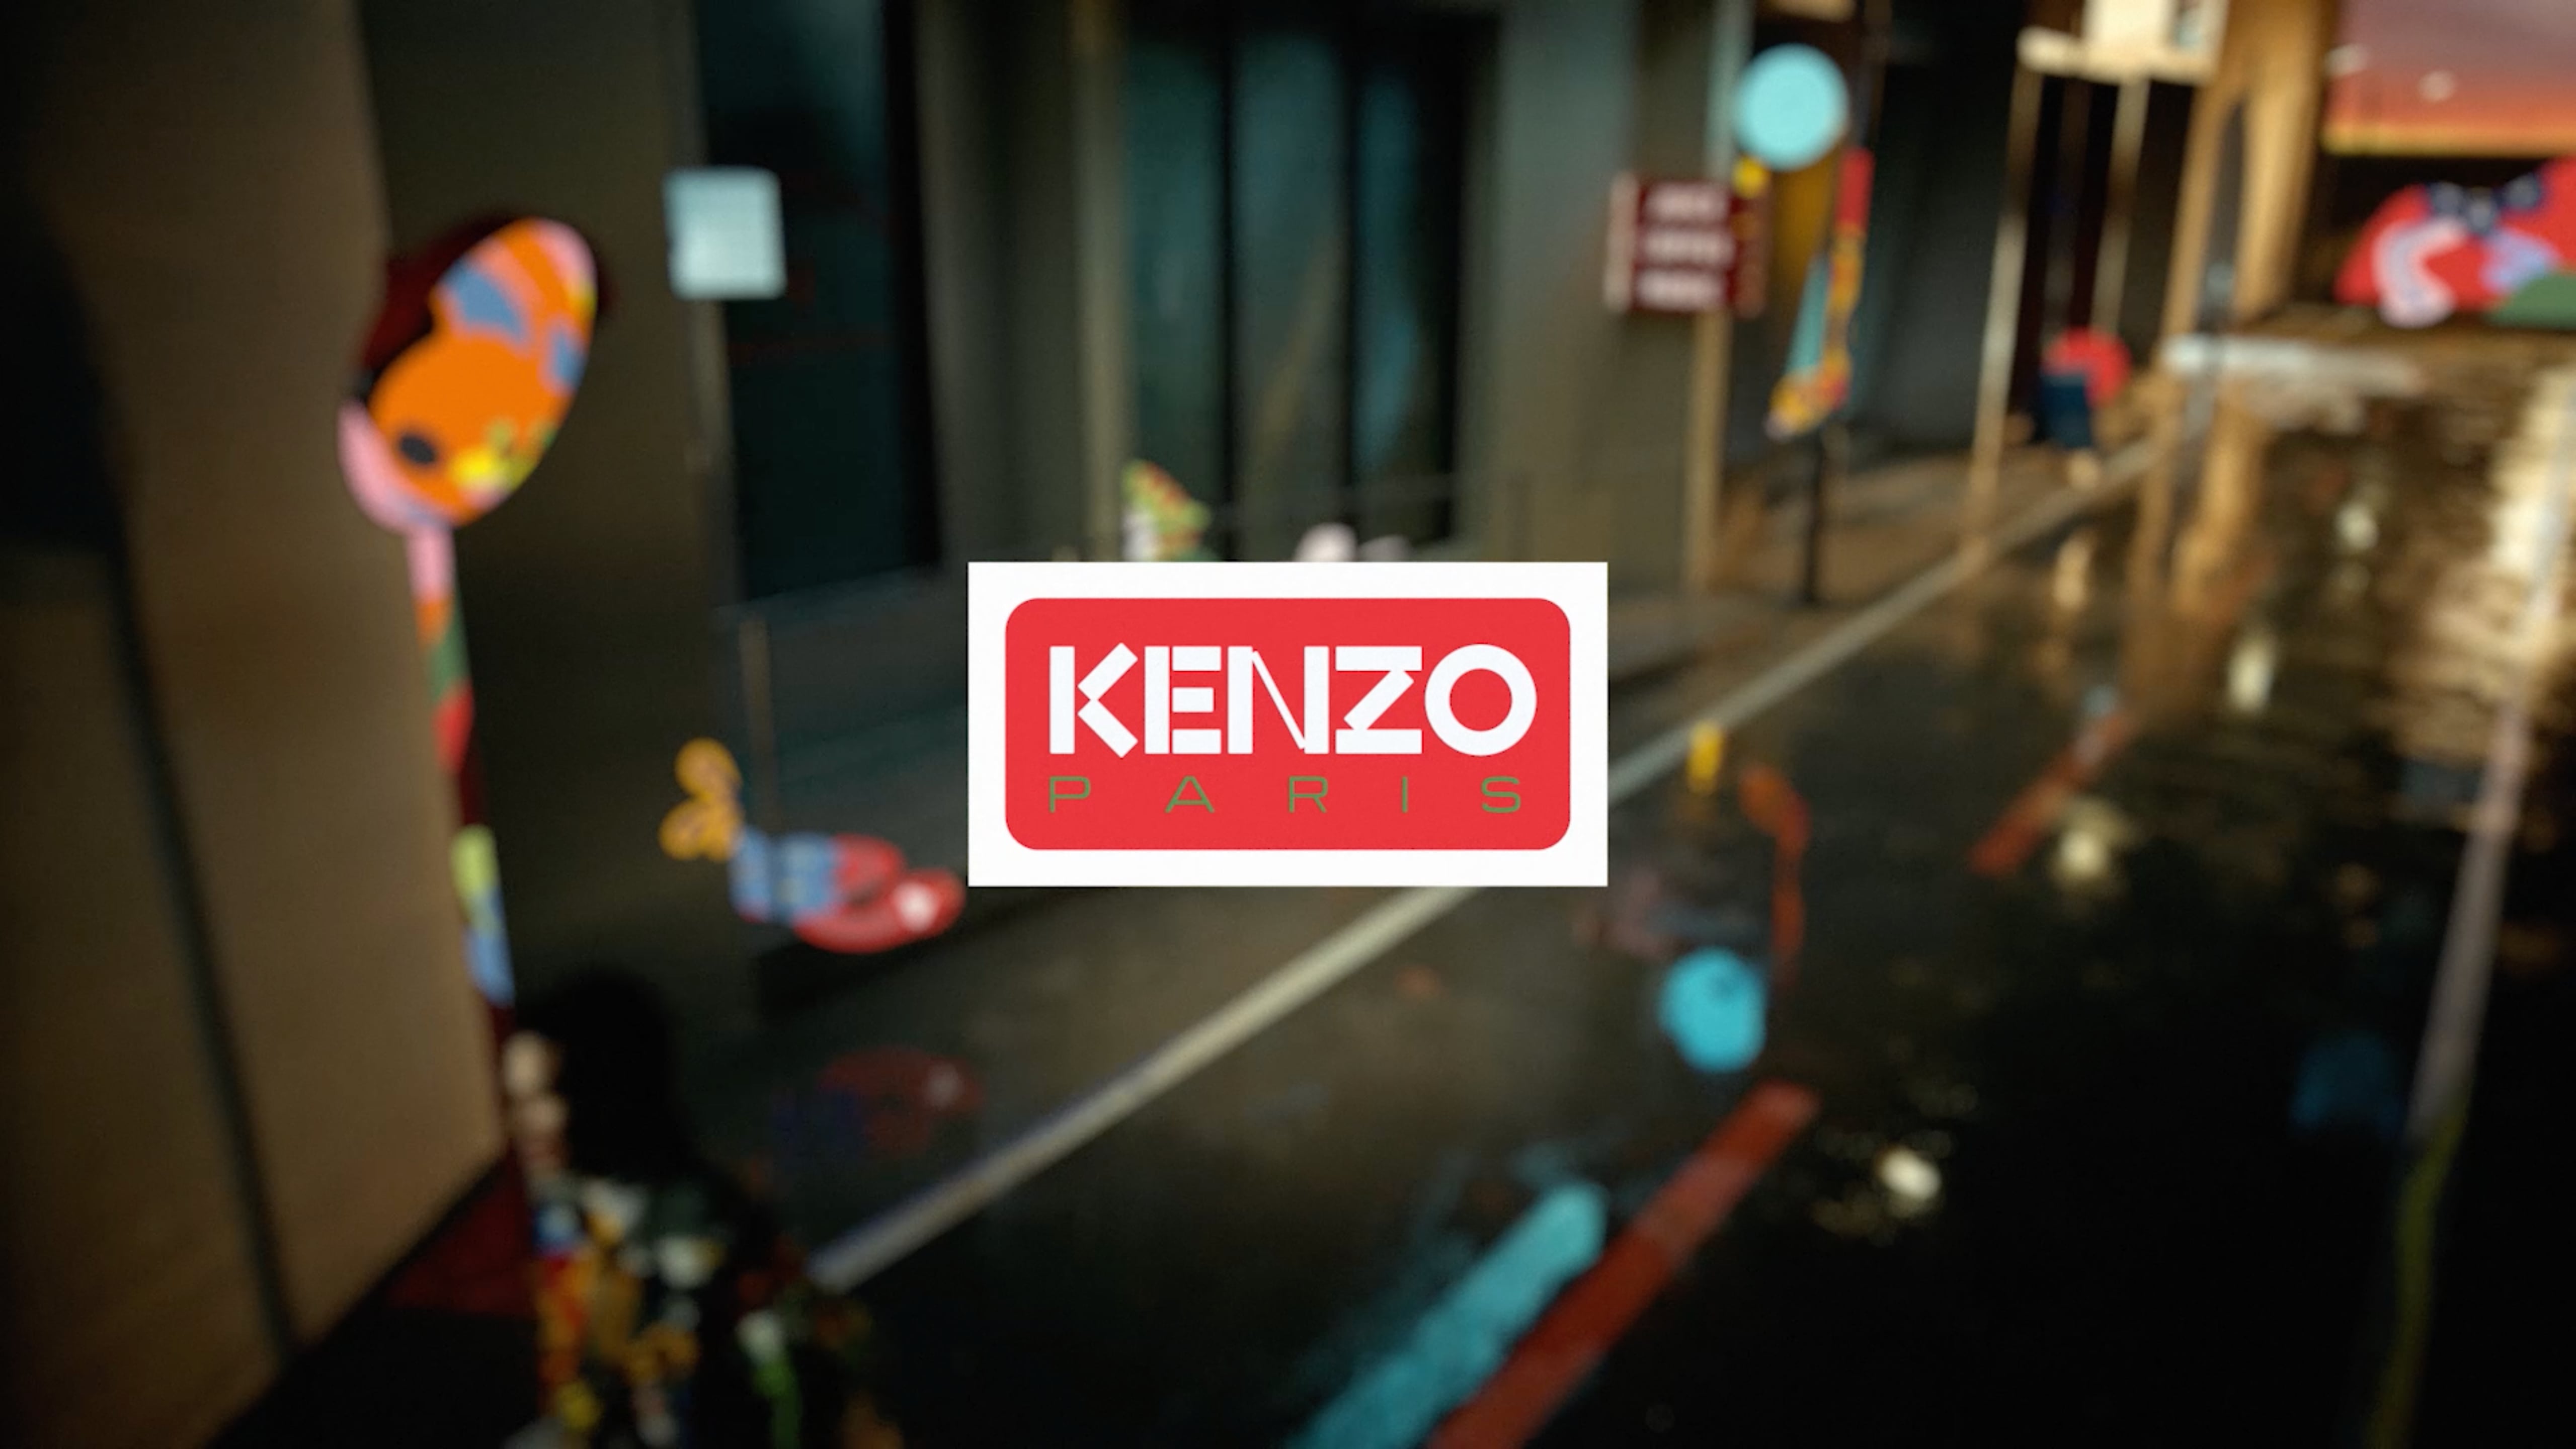 KENZO X 萧敬腾 on Vimeo